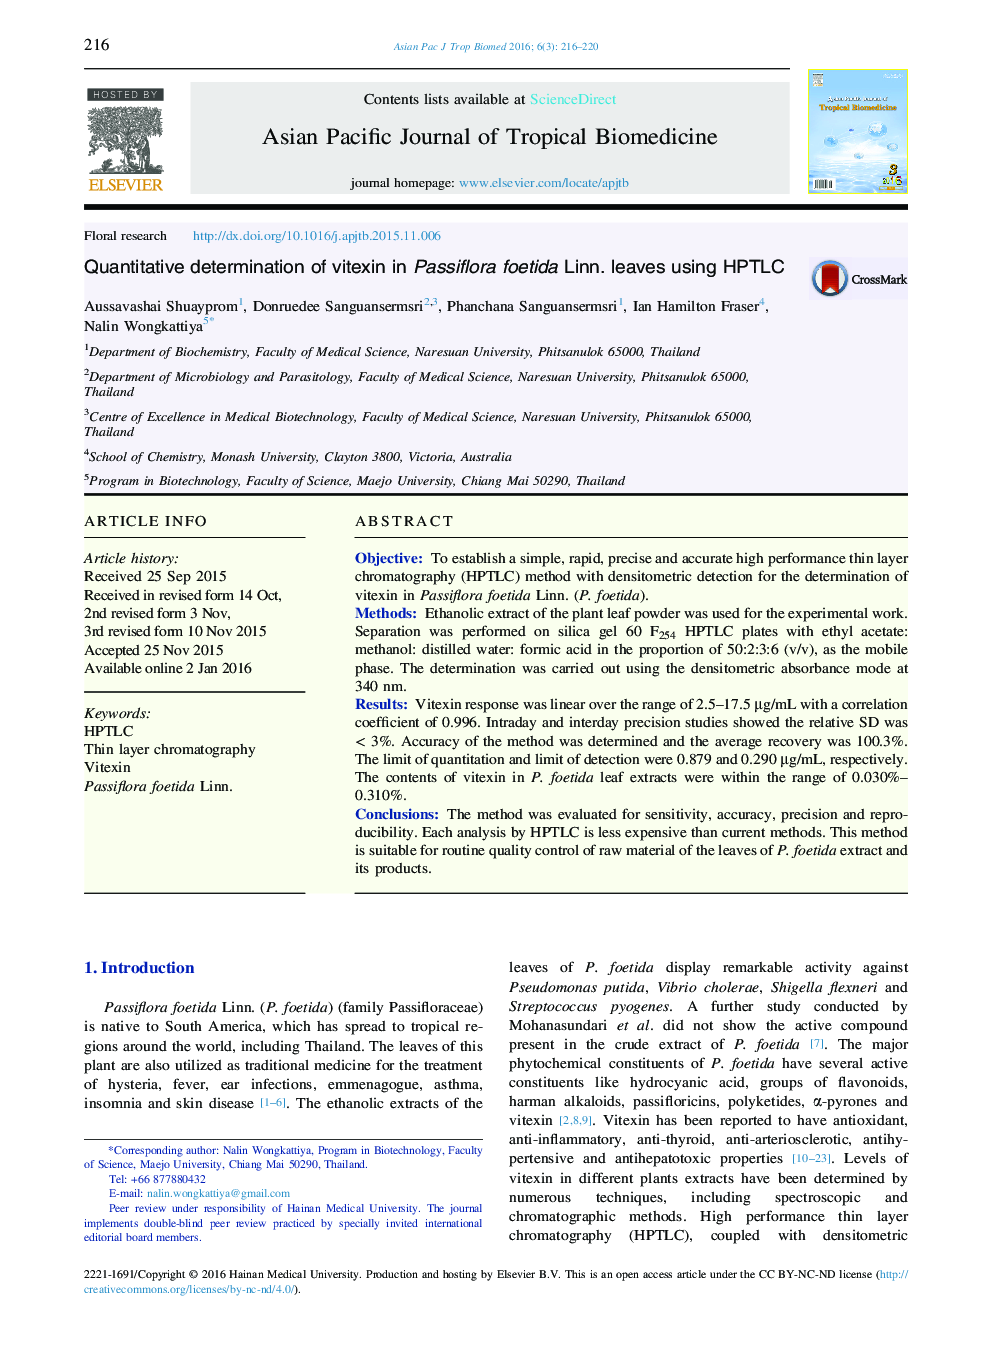 Quantitative determination of vitexin in Passiflora foetida Linn. leaves using HPTLC 